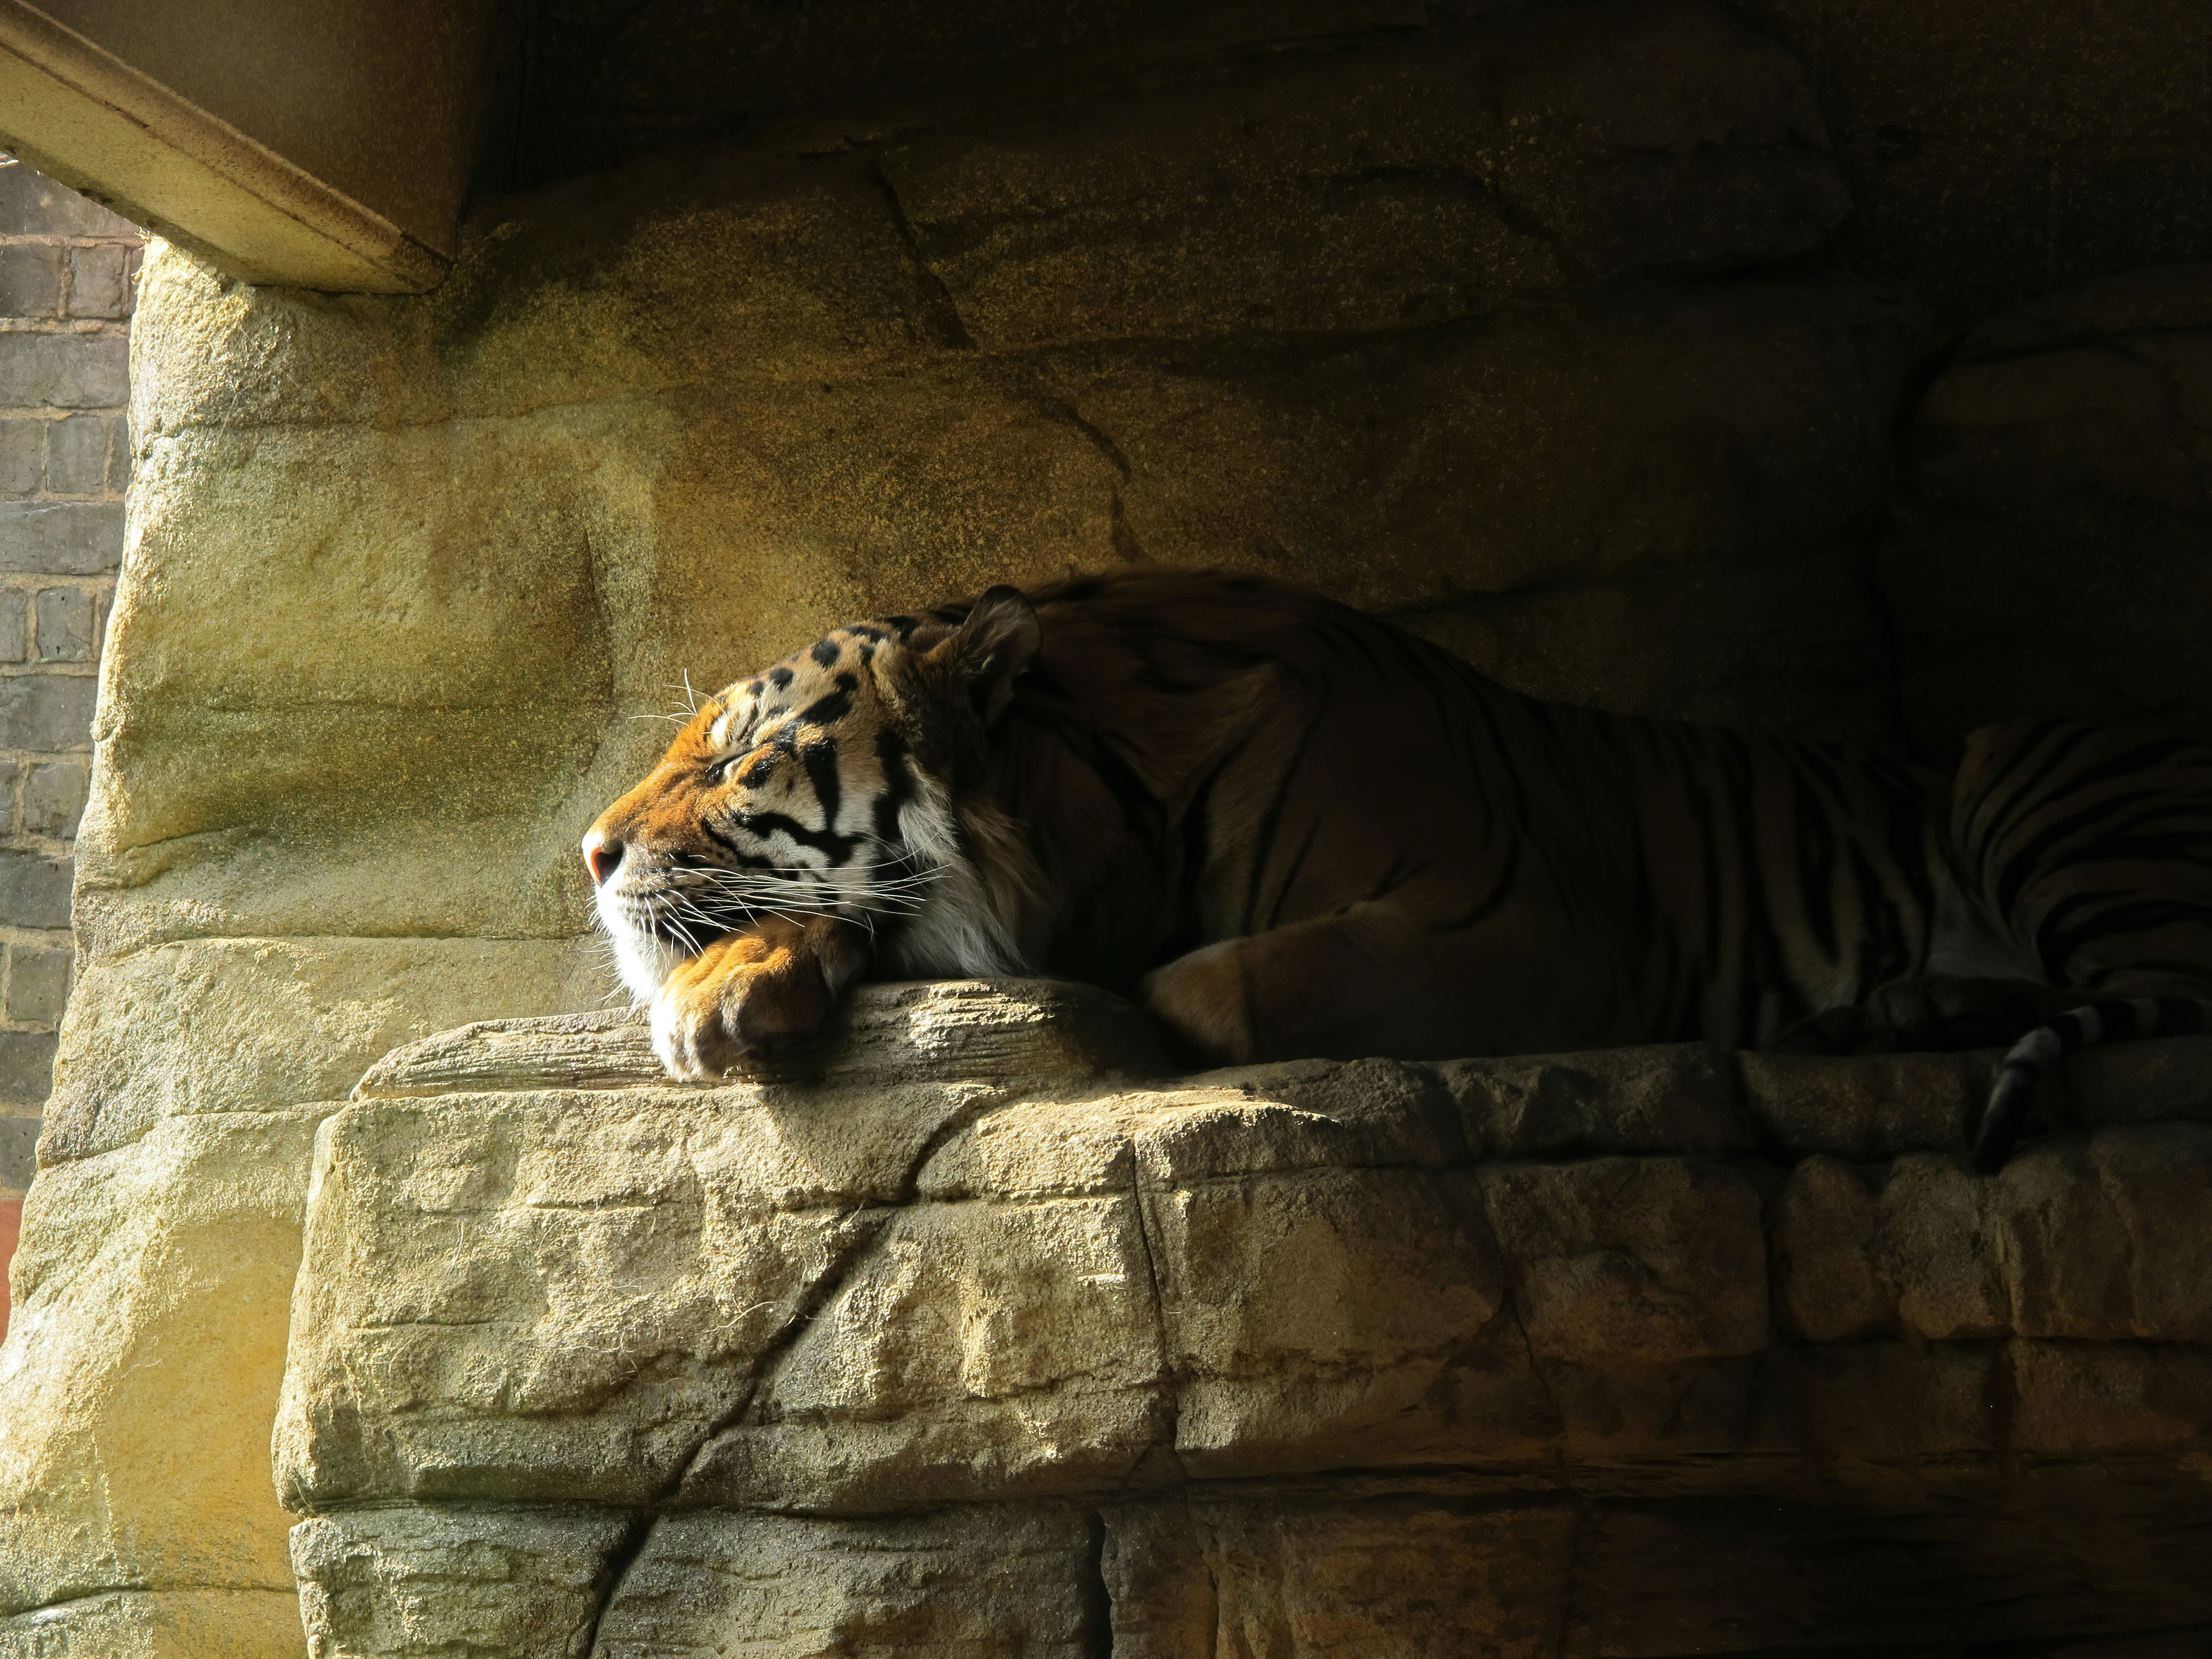 tiger sleeping closed eyes 4k 1616872023 - Tiger Sleeping Closed Eyes 4k - Tiger Sleeping Closed Eyes 4k wallpapers